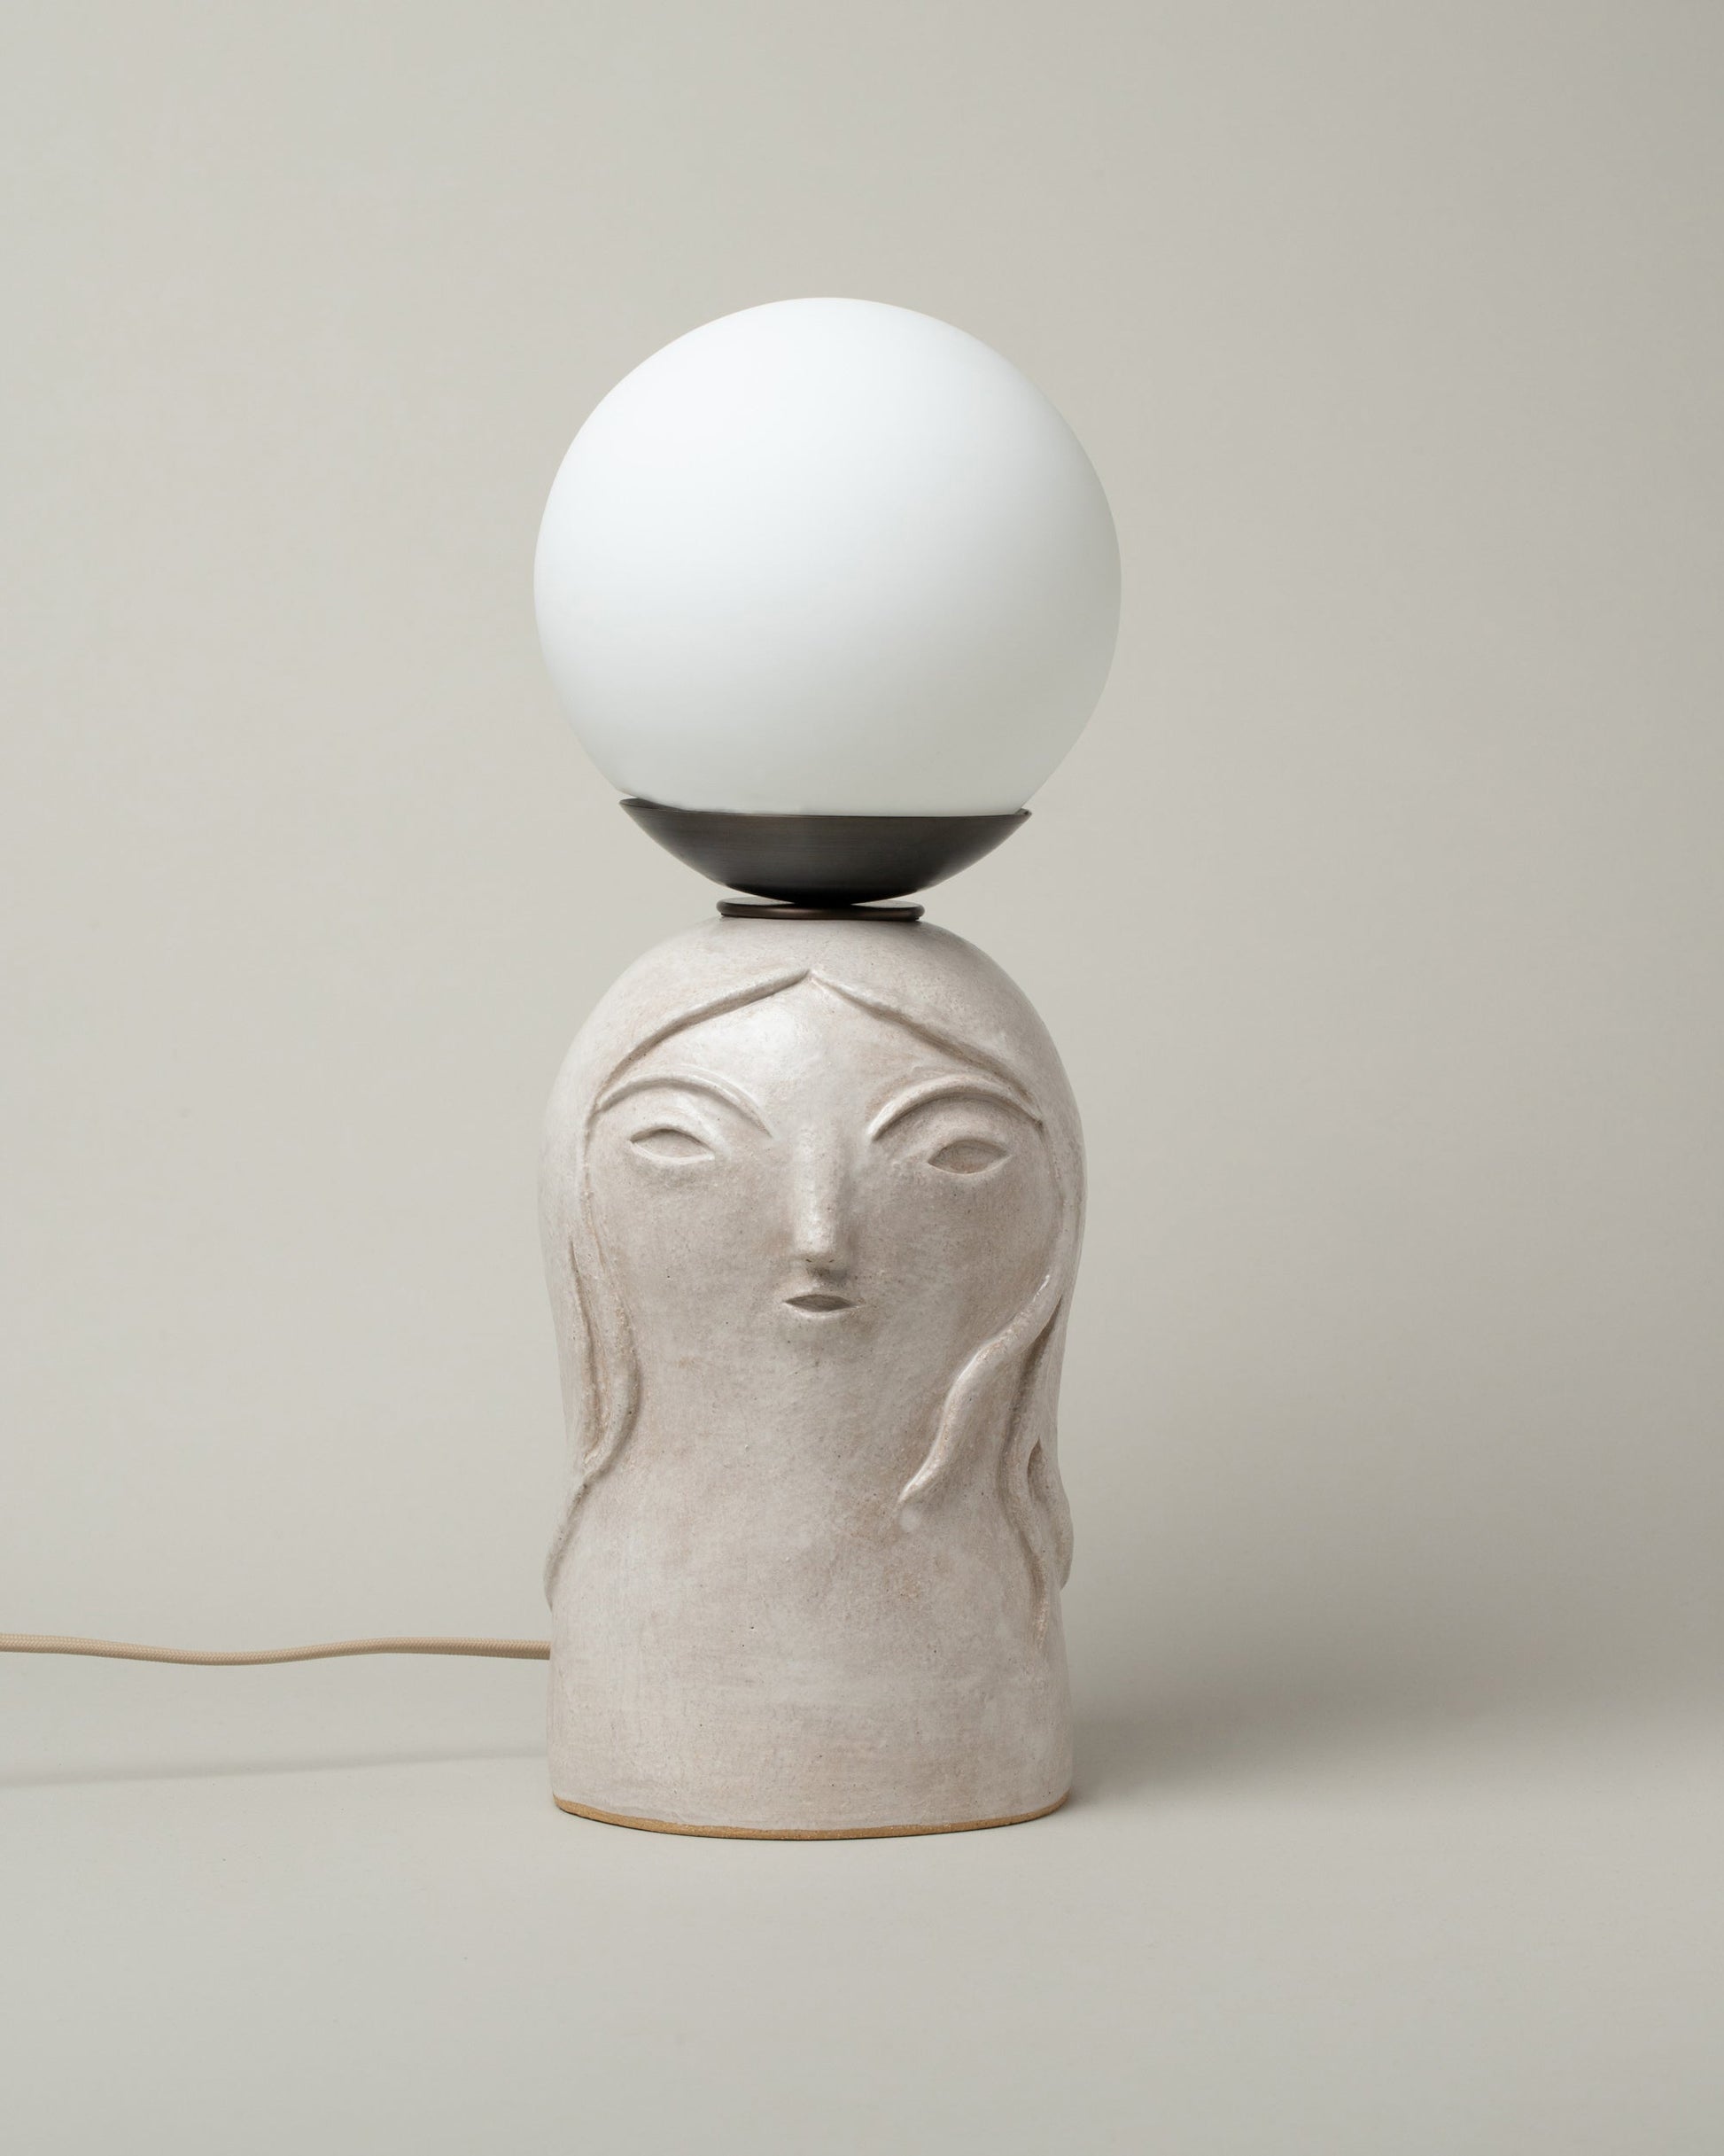 Rami Kim Large / White Floating Penelope Table Lamp on light color background.